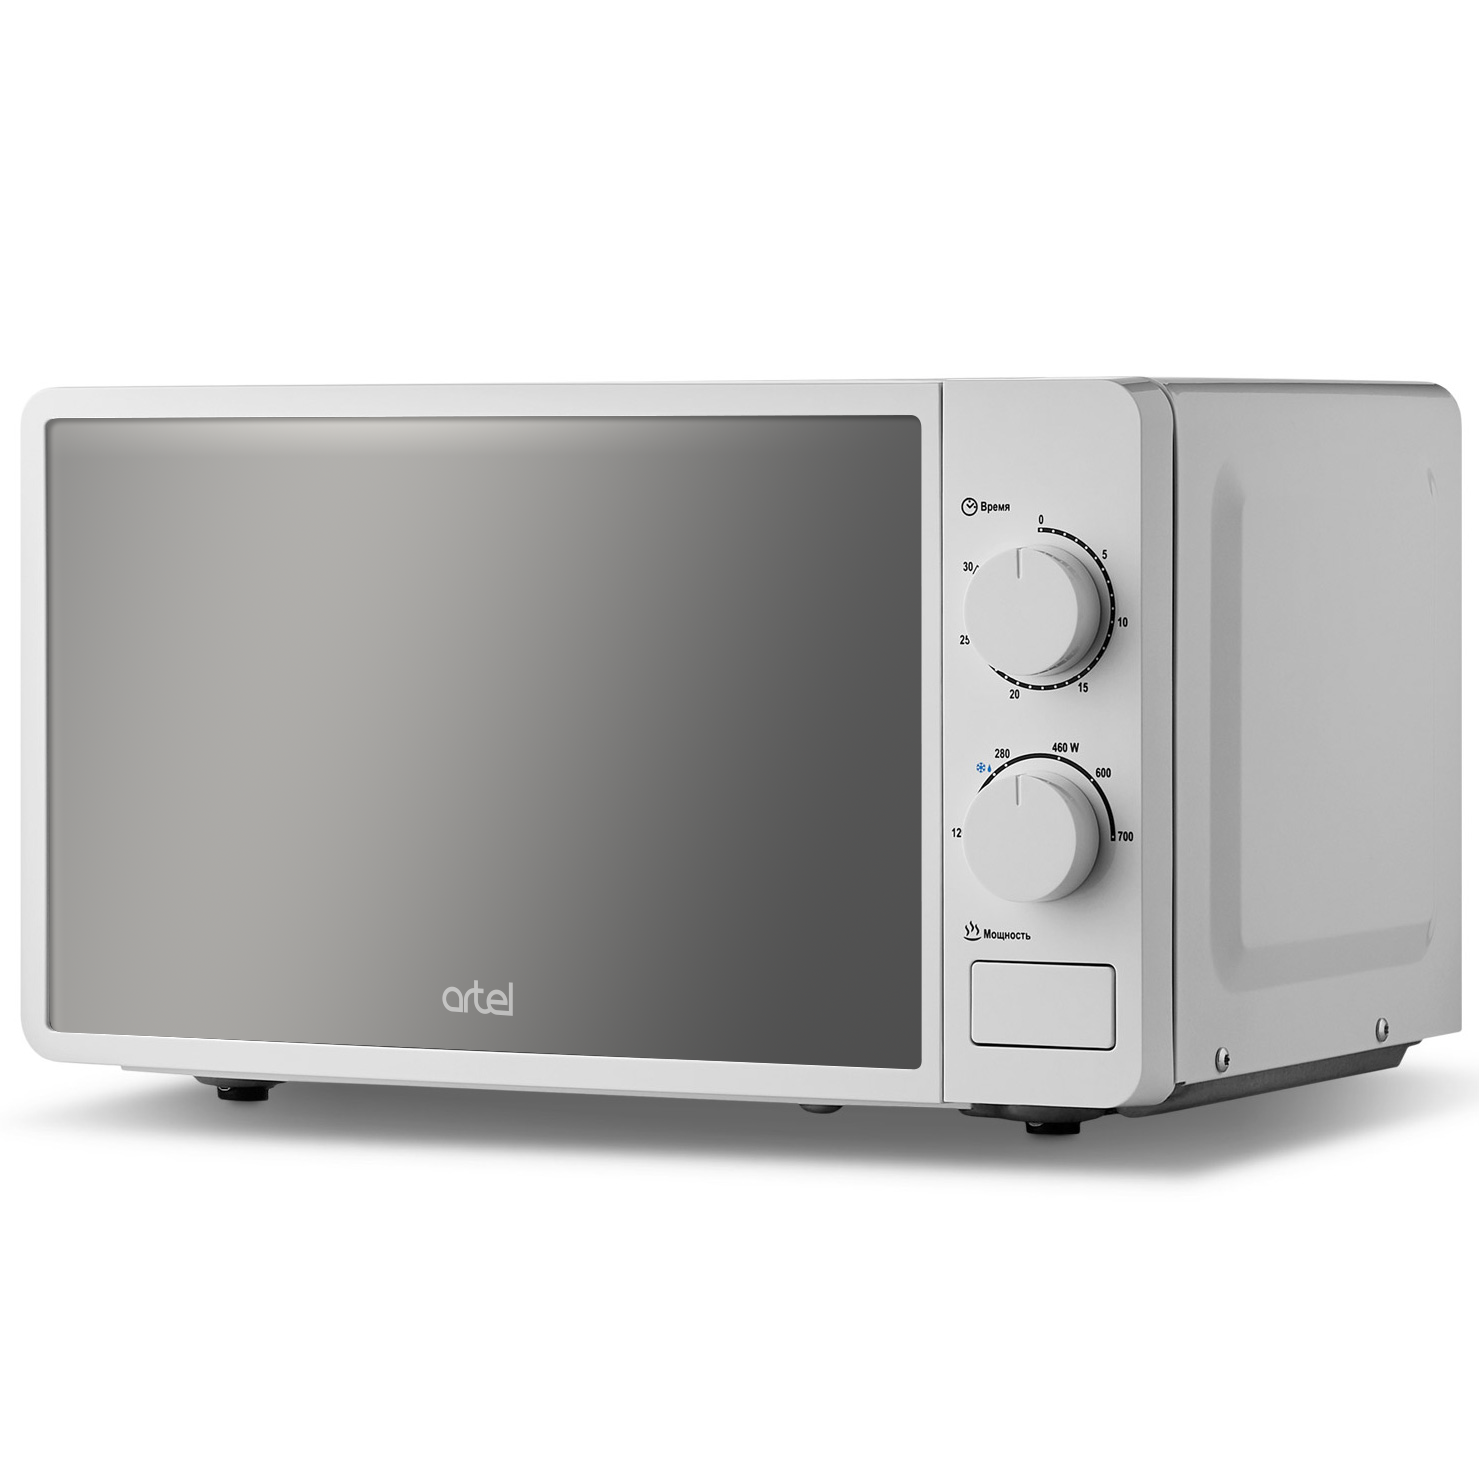 Artel 20MX63 Prime microwave